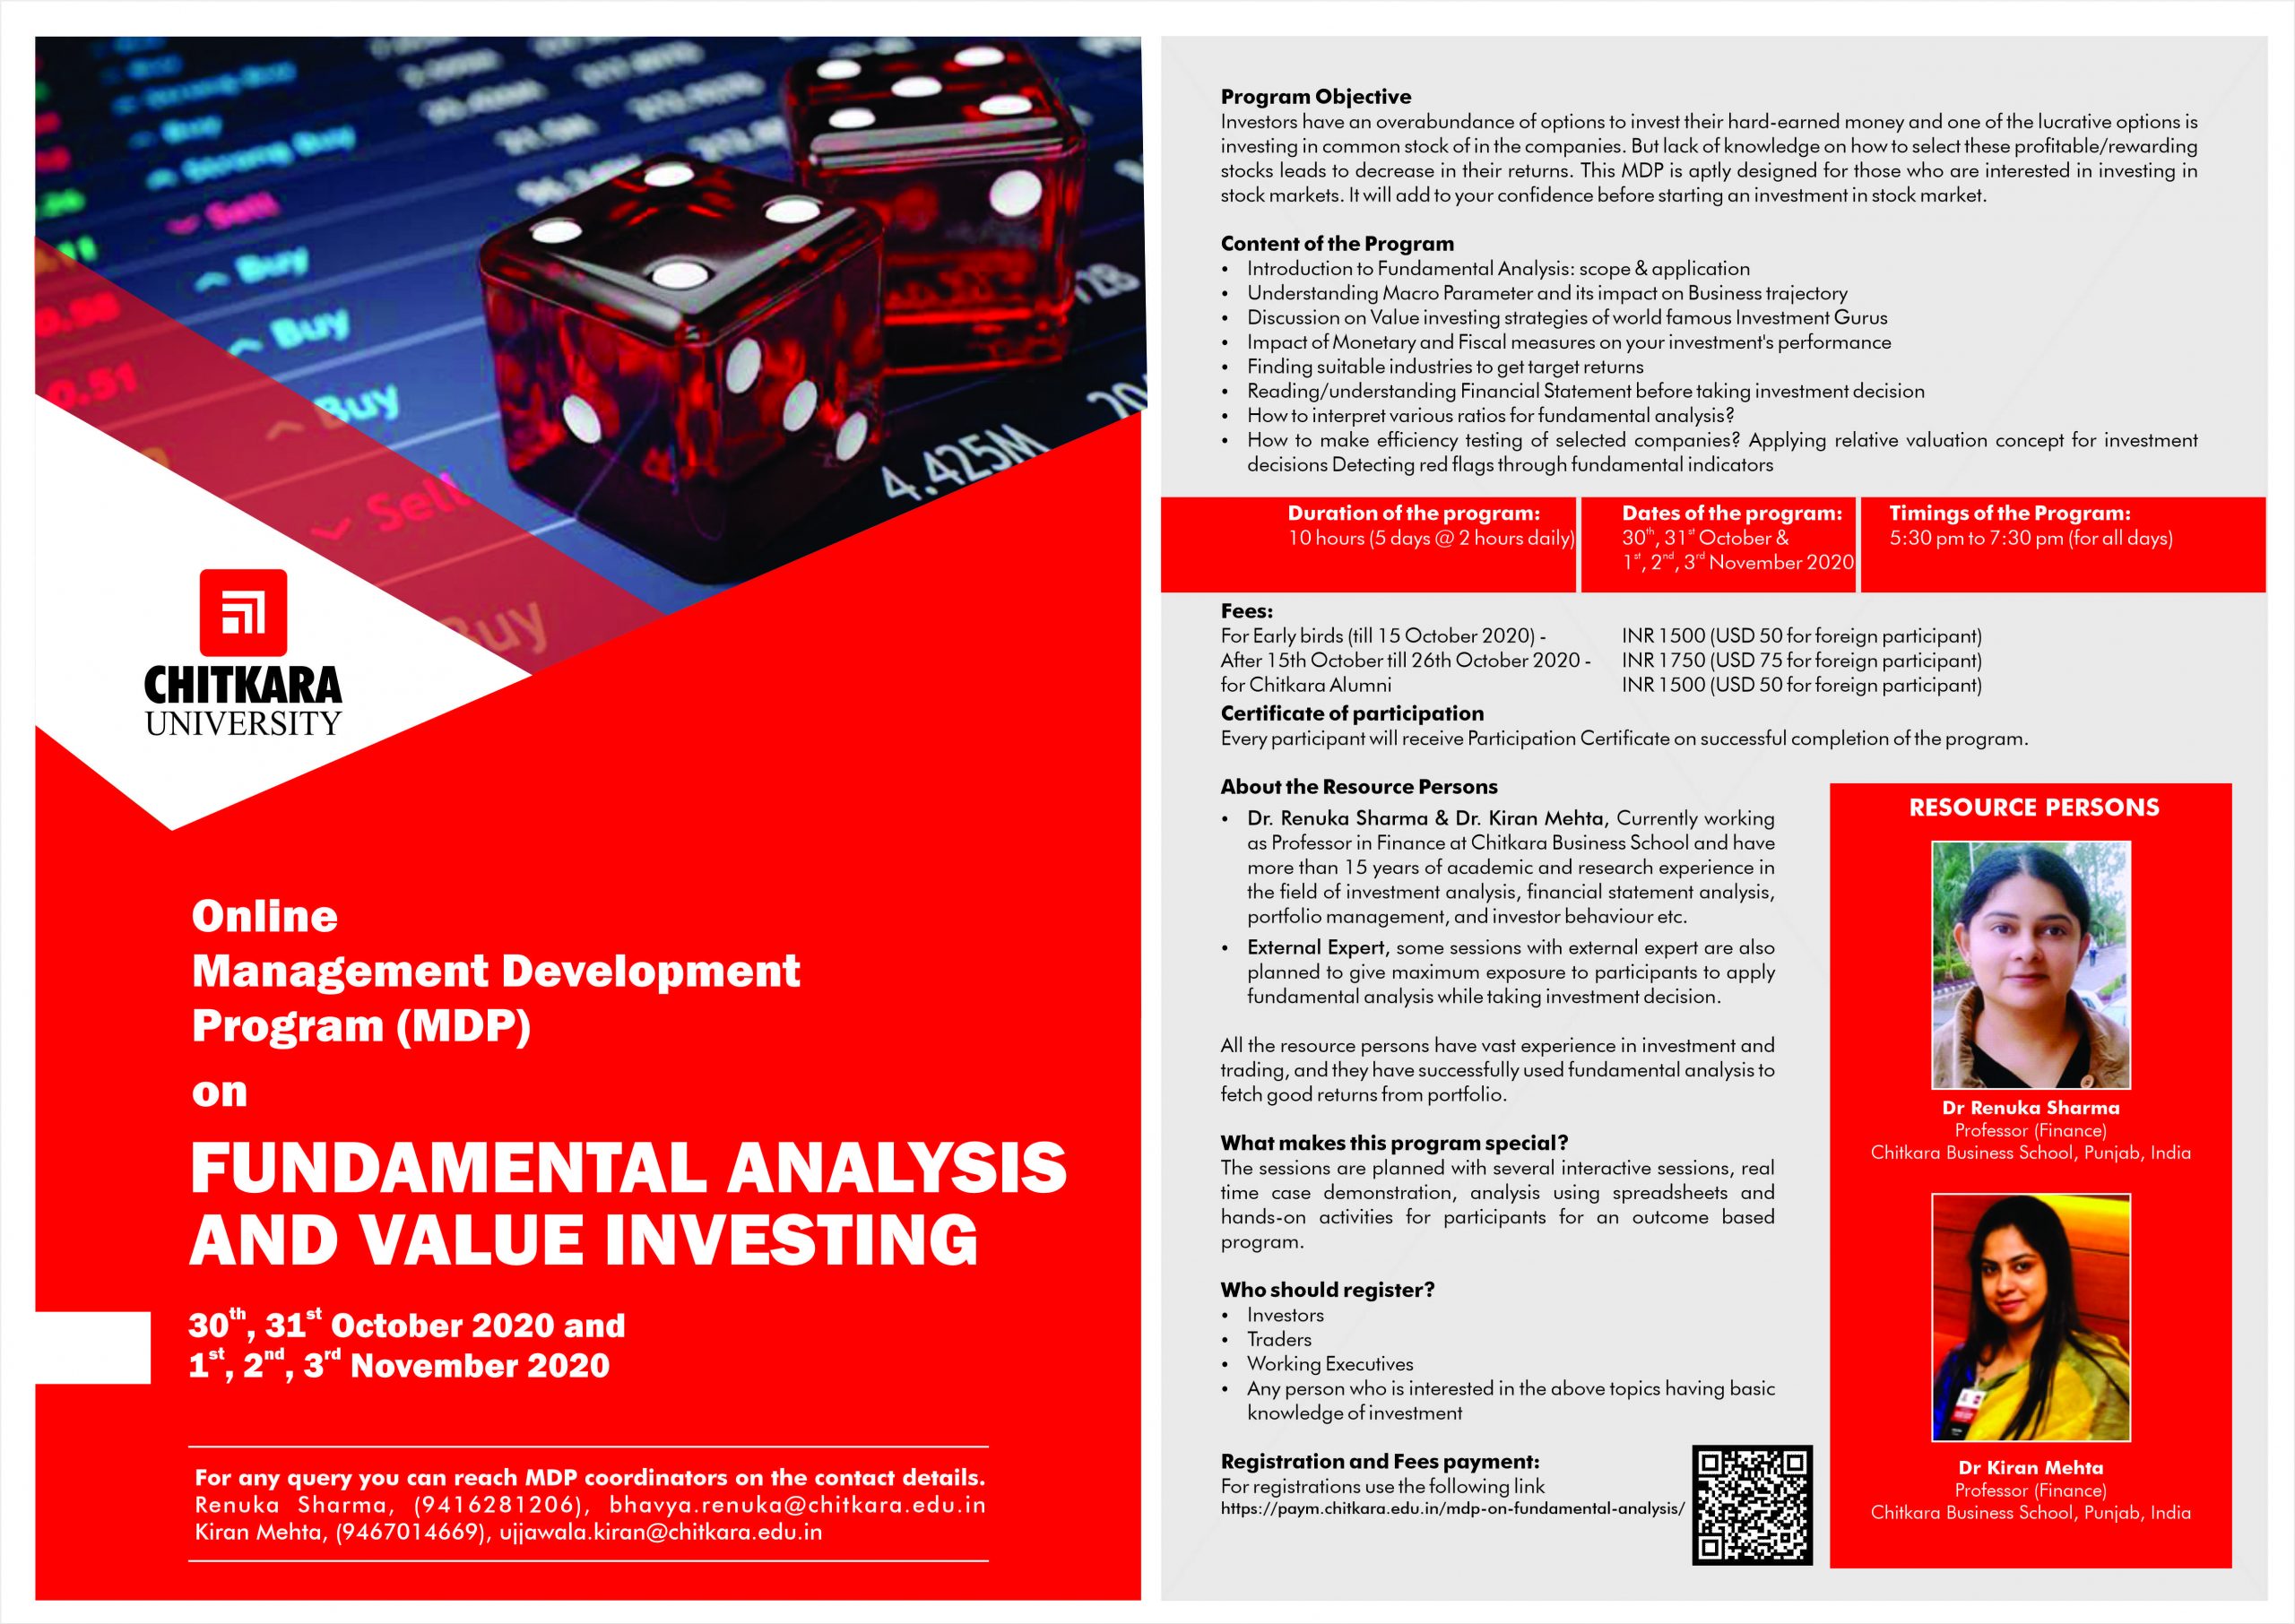 Online Management Development Program on Fundamental Analysis and Value Investing.